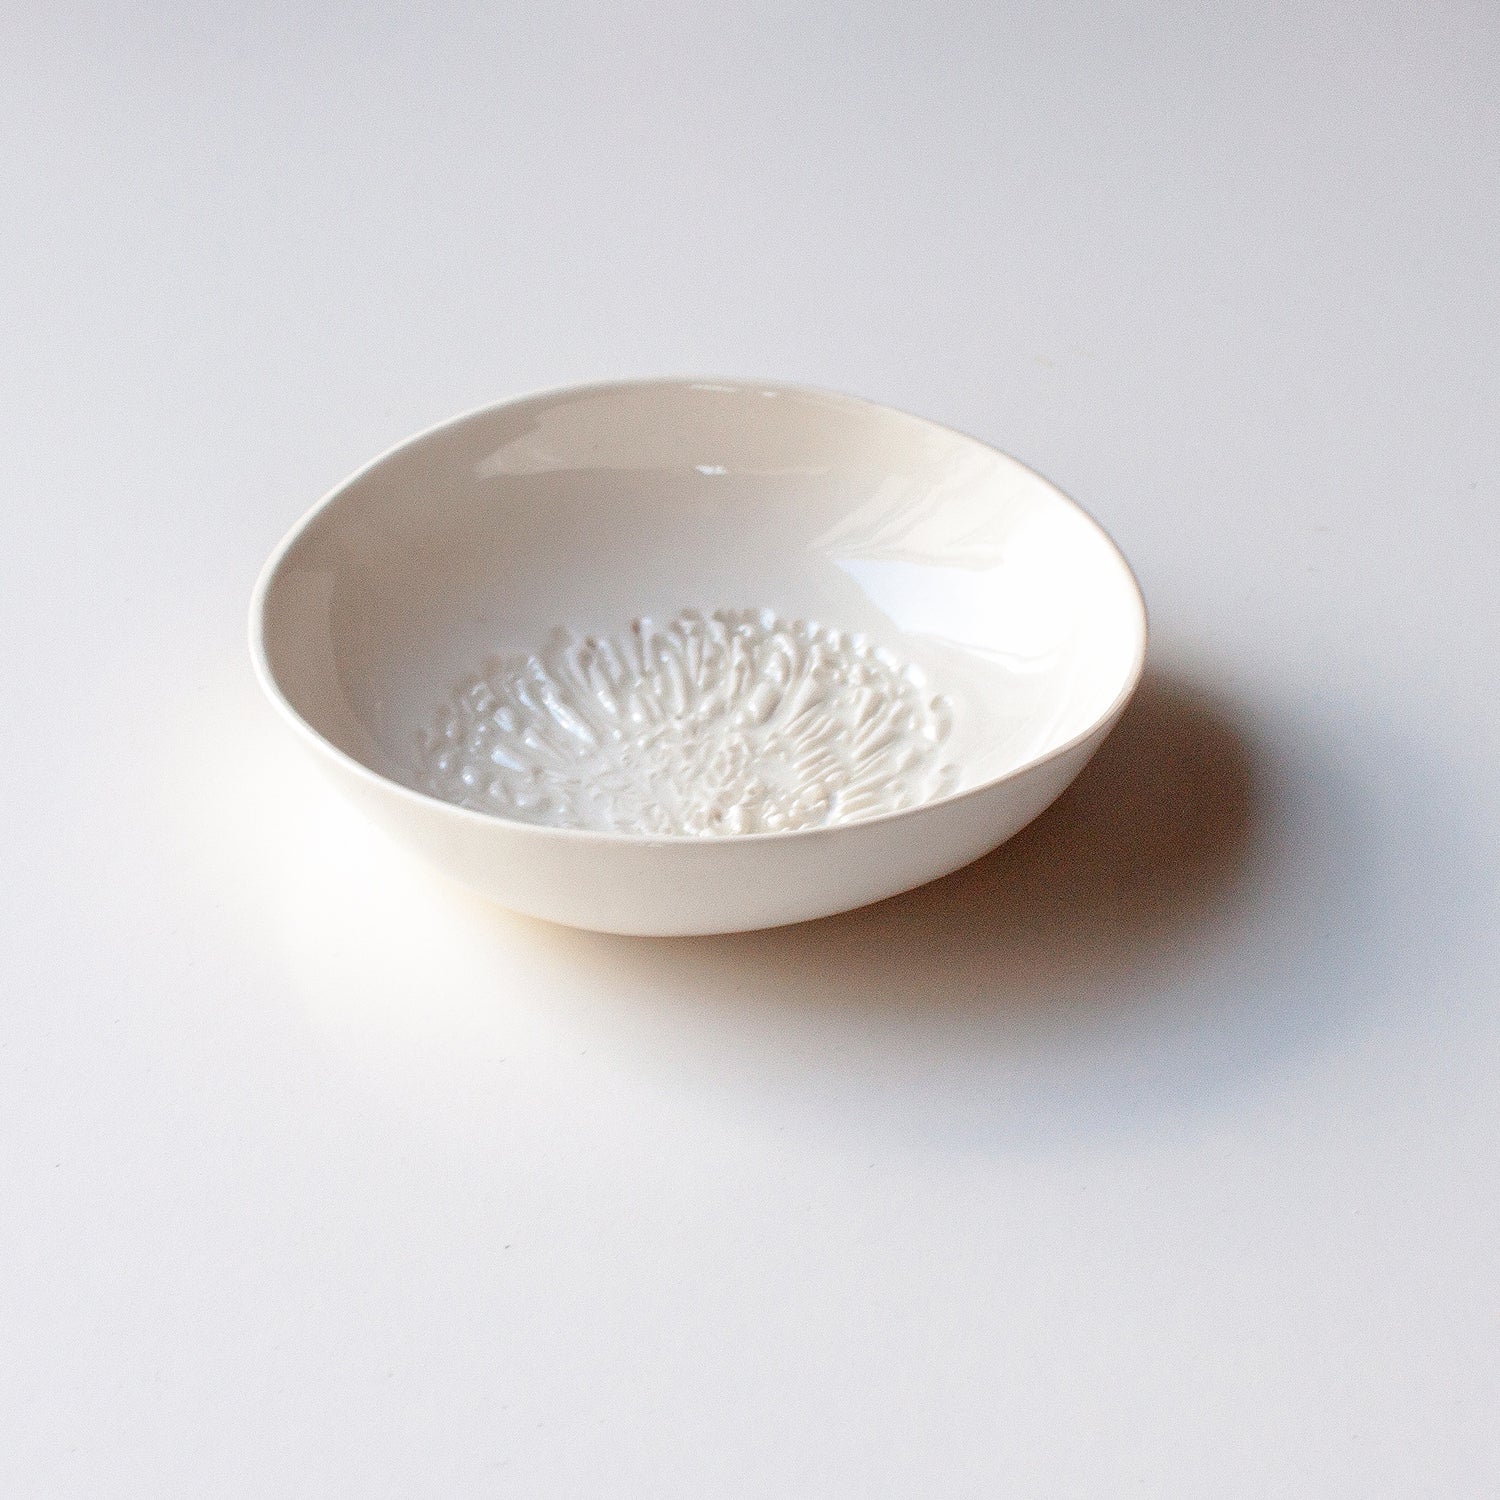 Ceramic dipping bowls